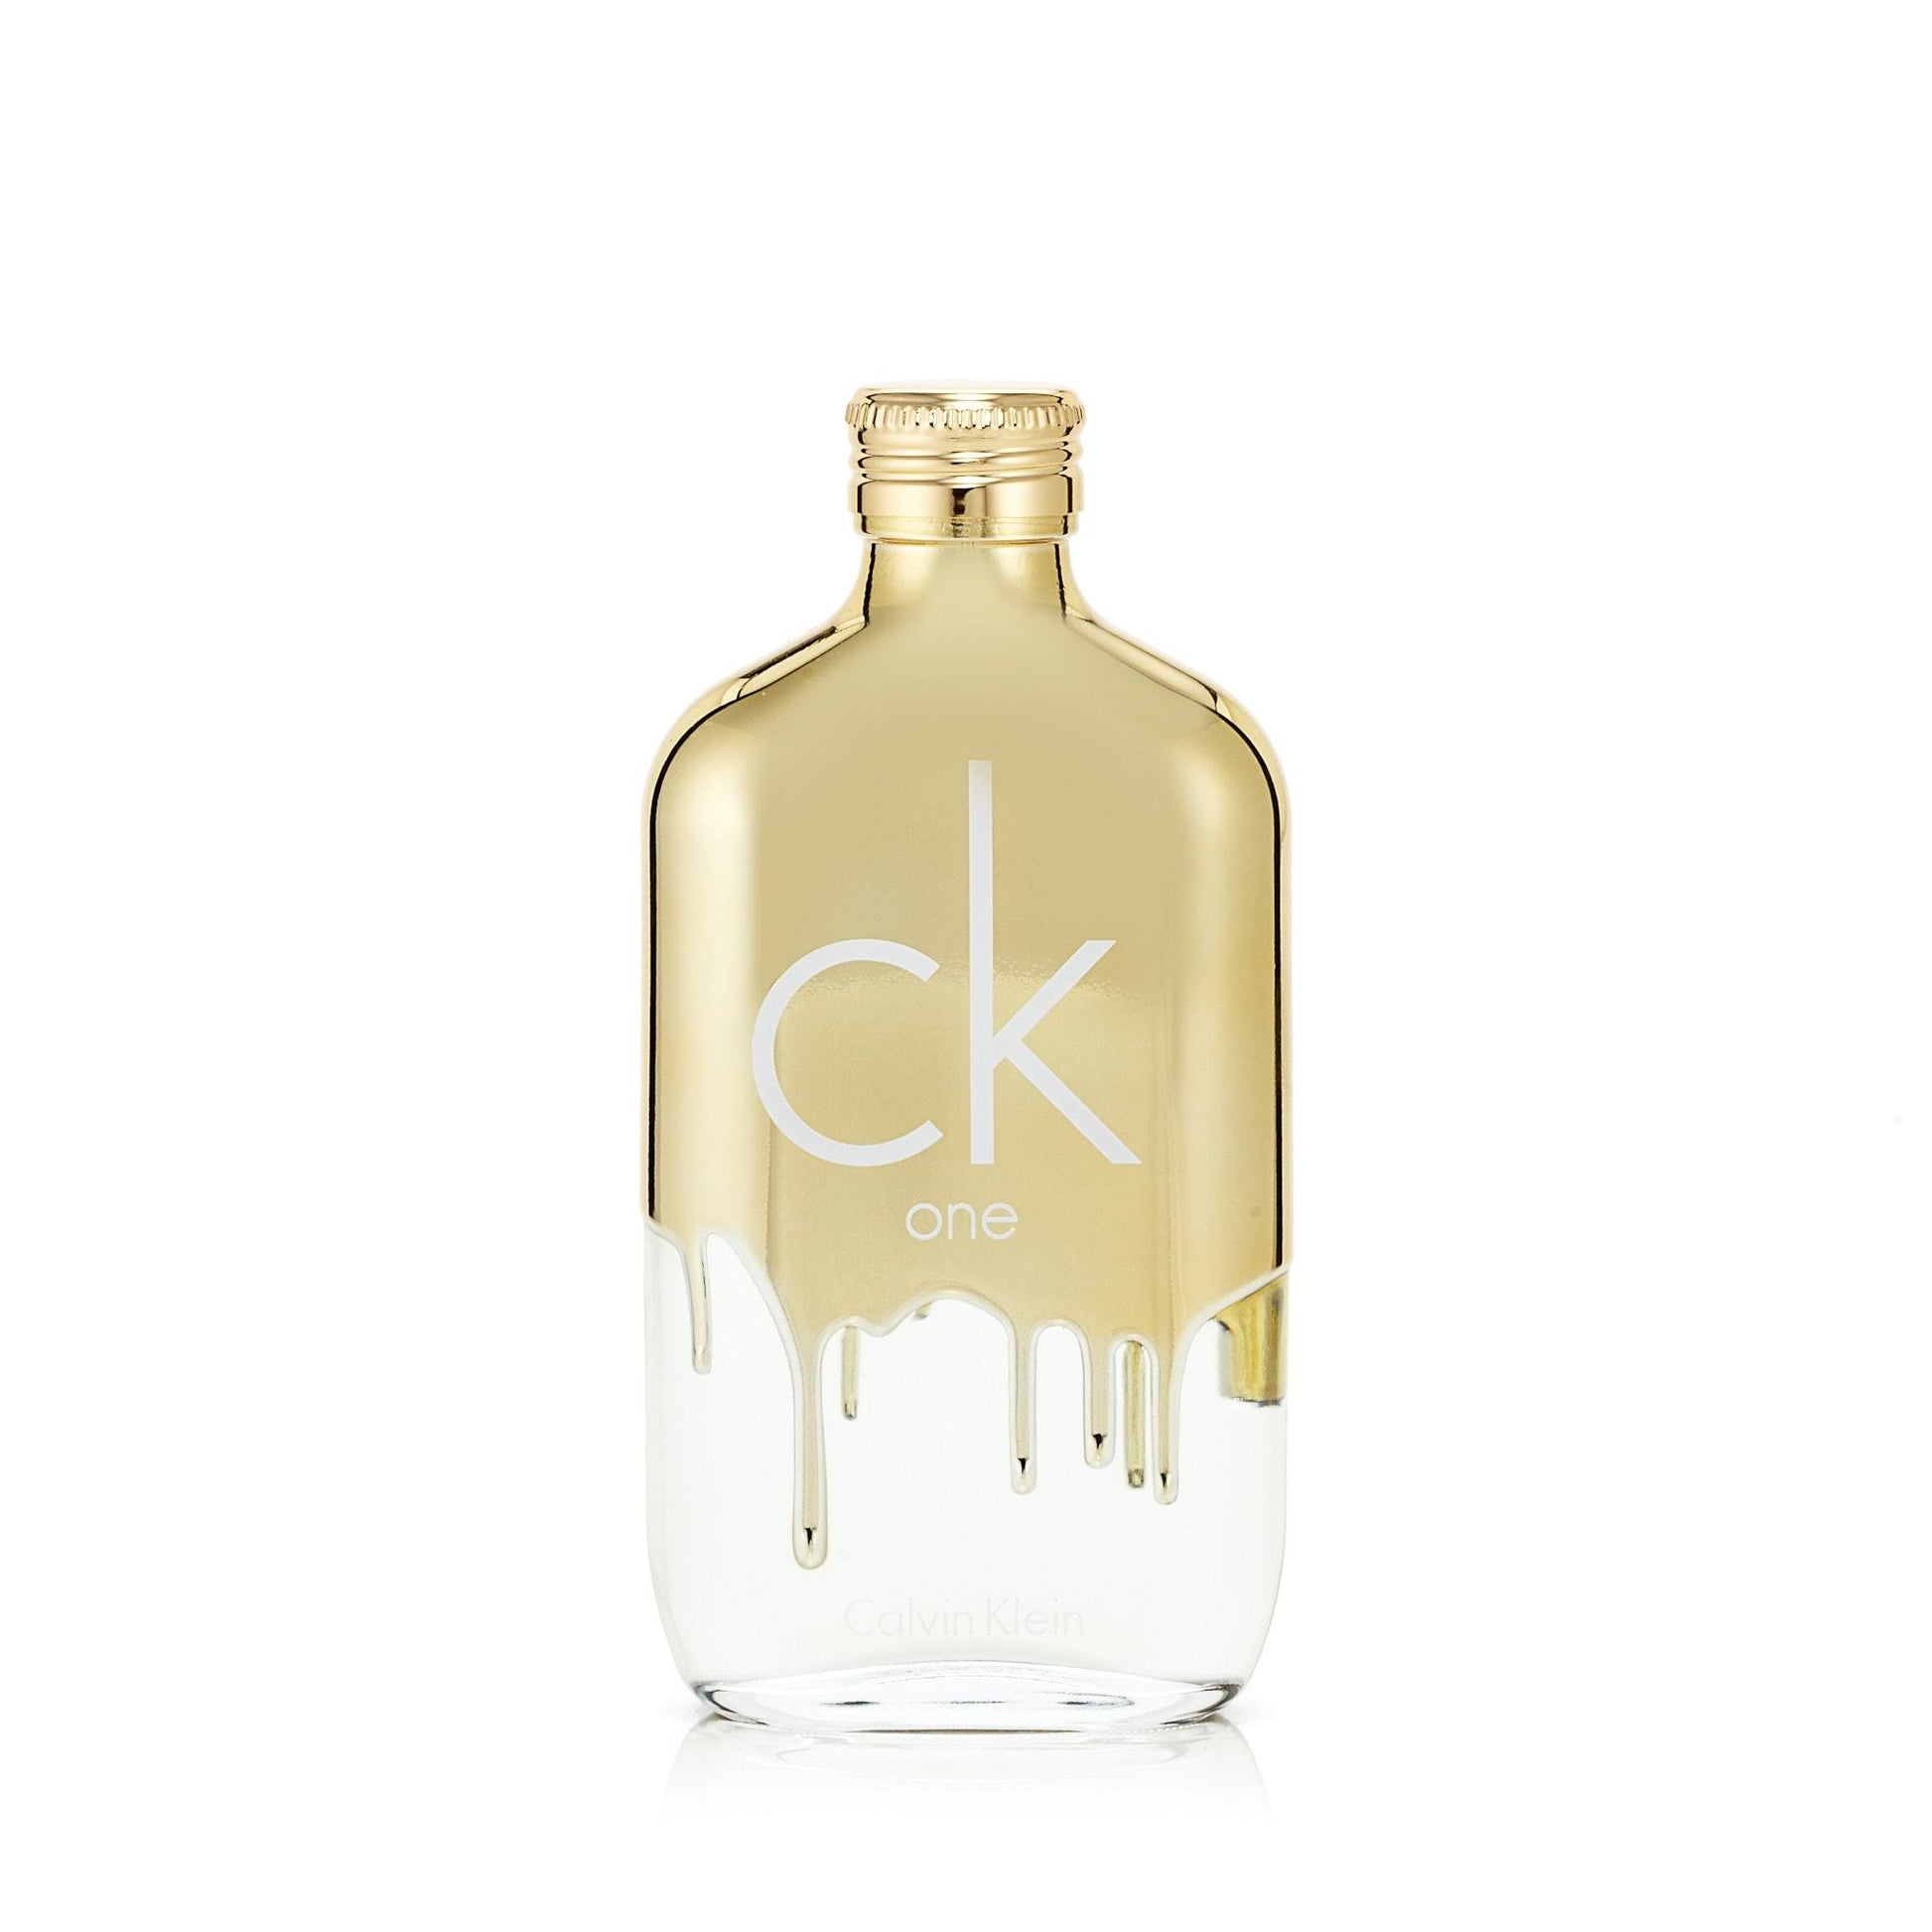 CK One Gold Eau de Toilette Spray for Women and Men by Calvin Klein, Product image 1